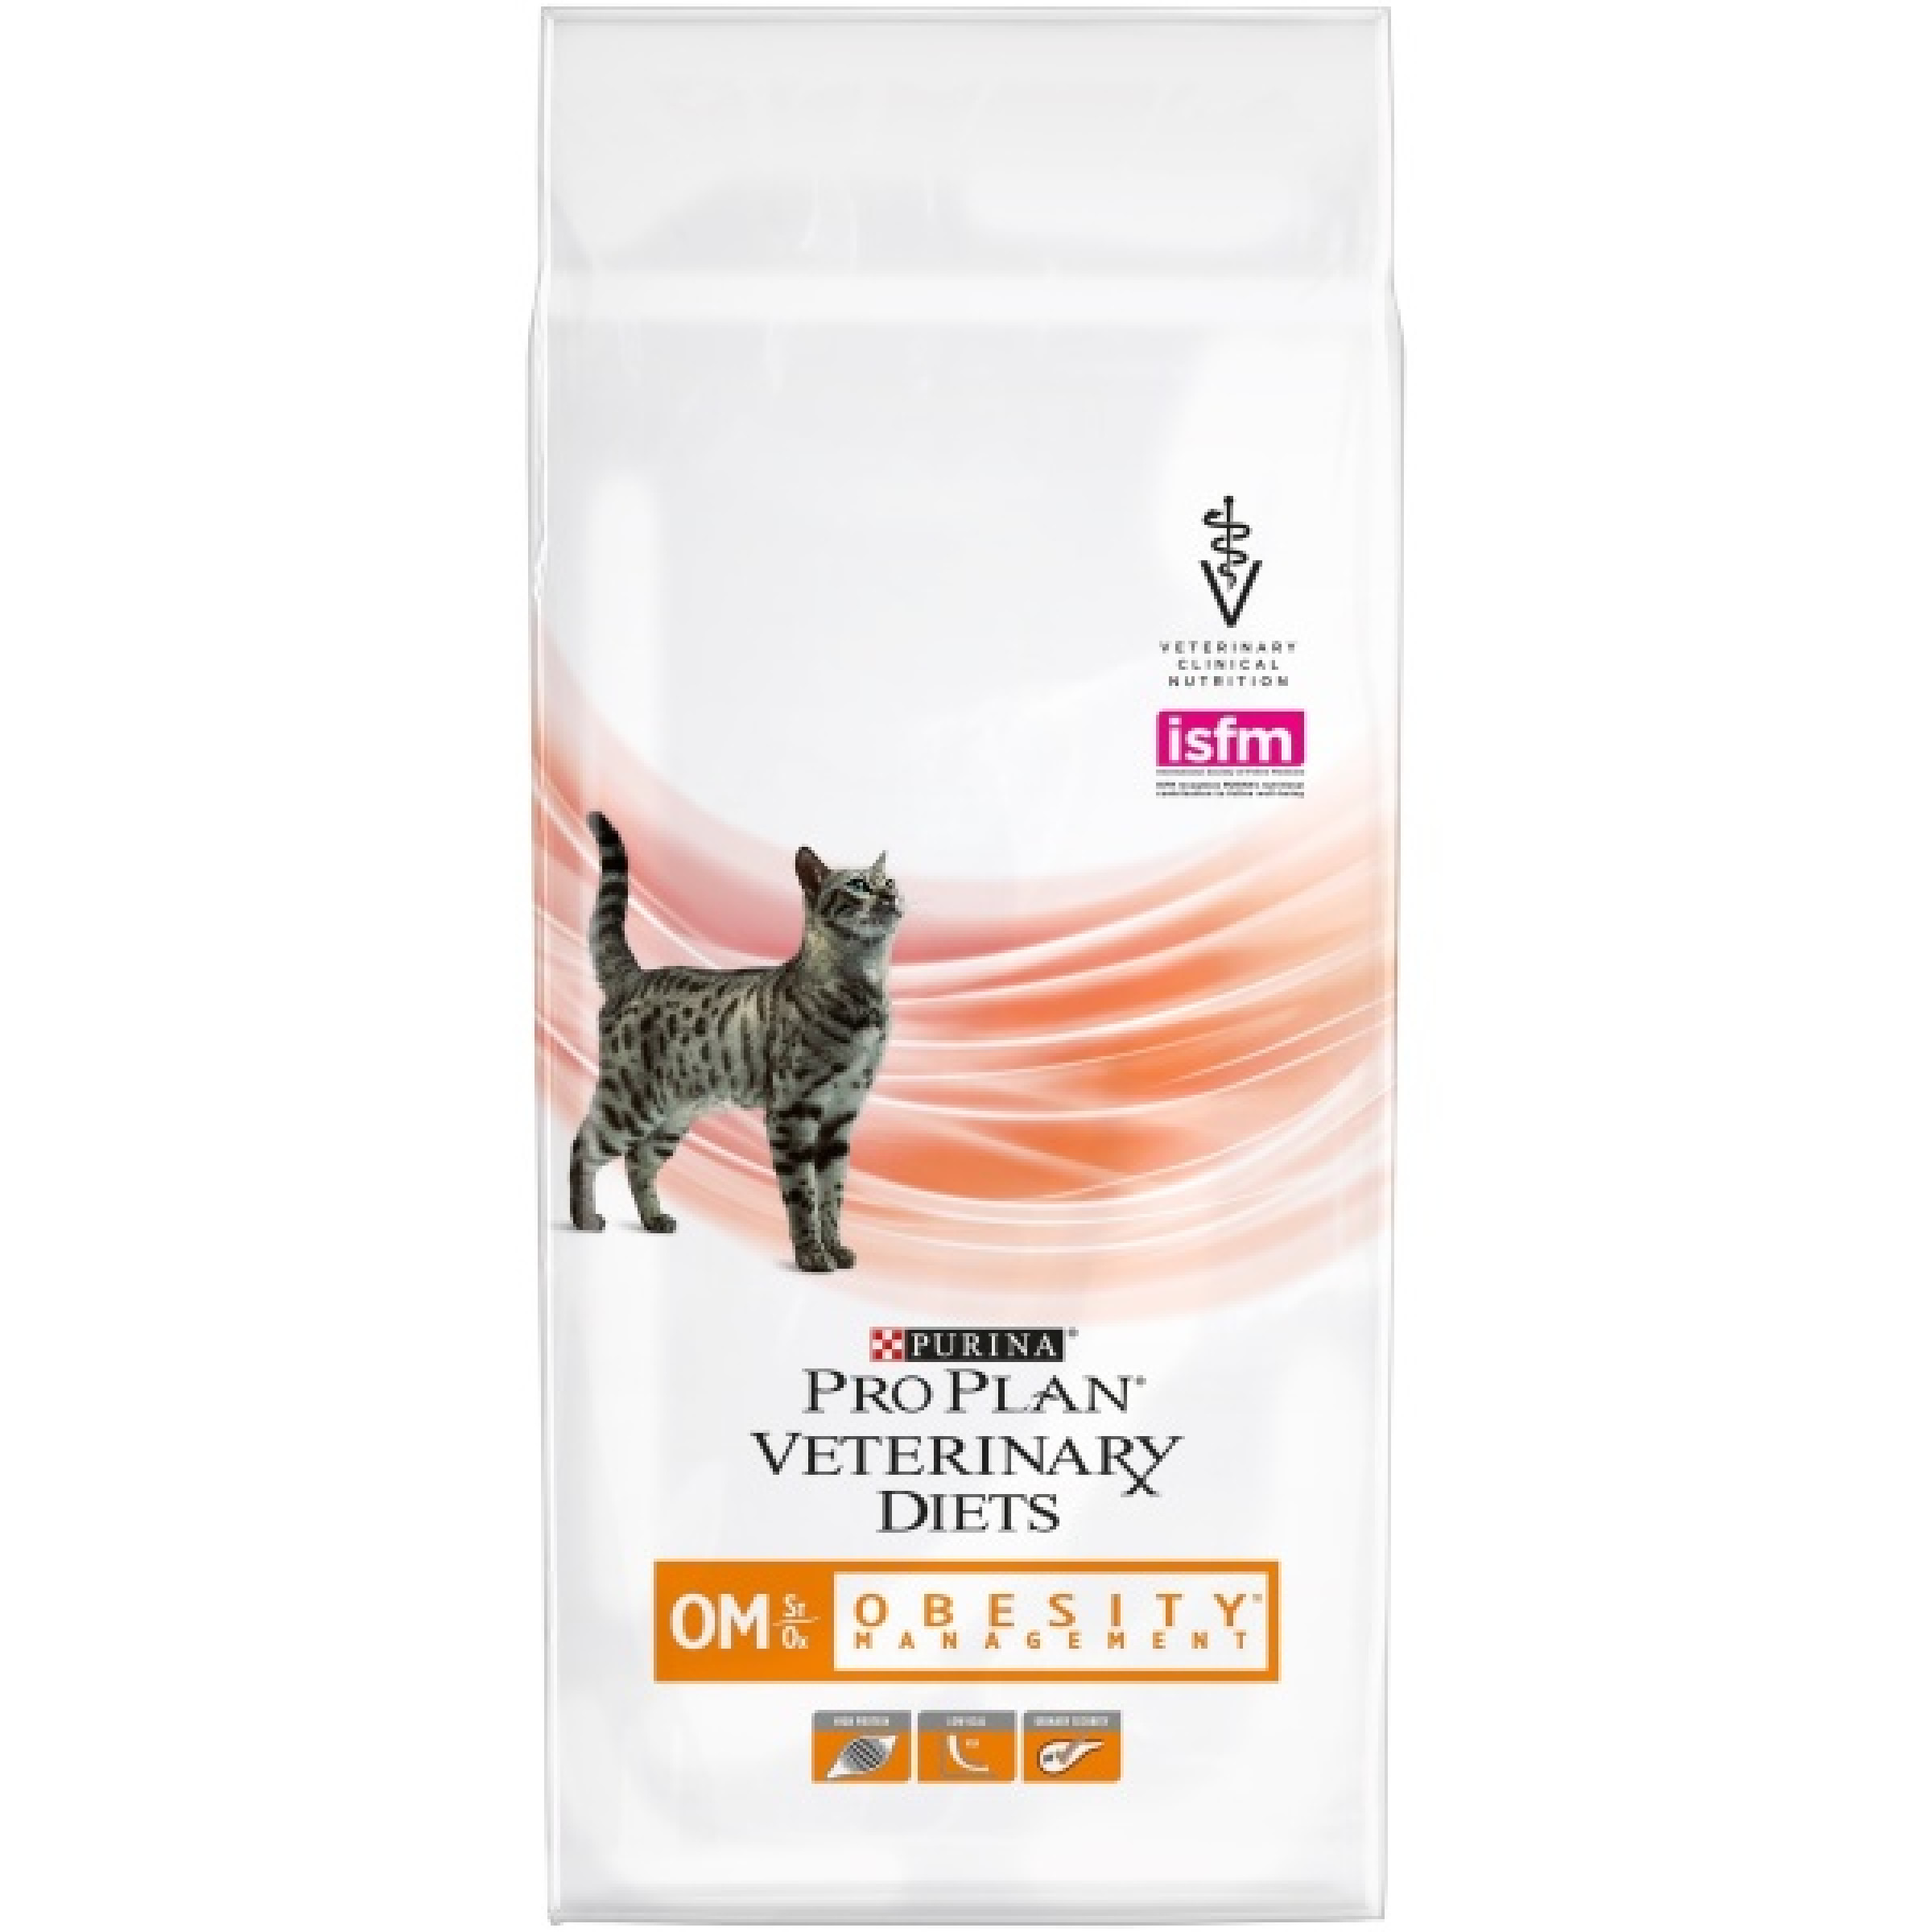 Сухой корм для кошек при ожирении Pro Plan Veterinary Diets OM 1,5 кг